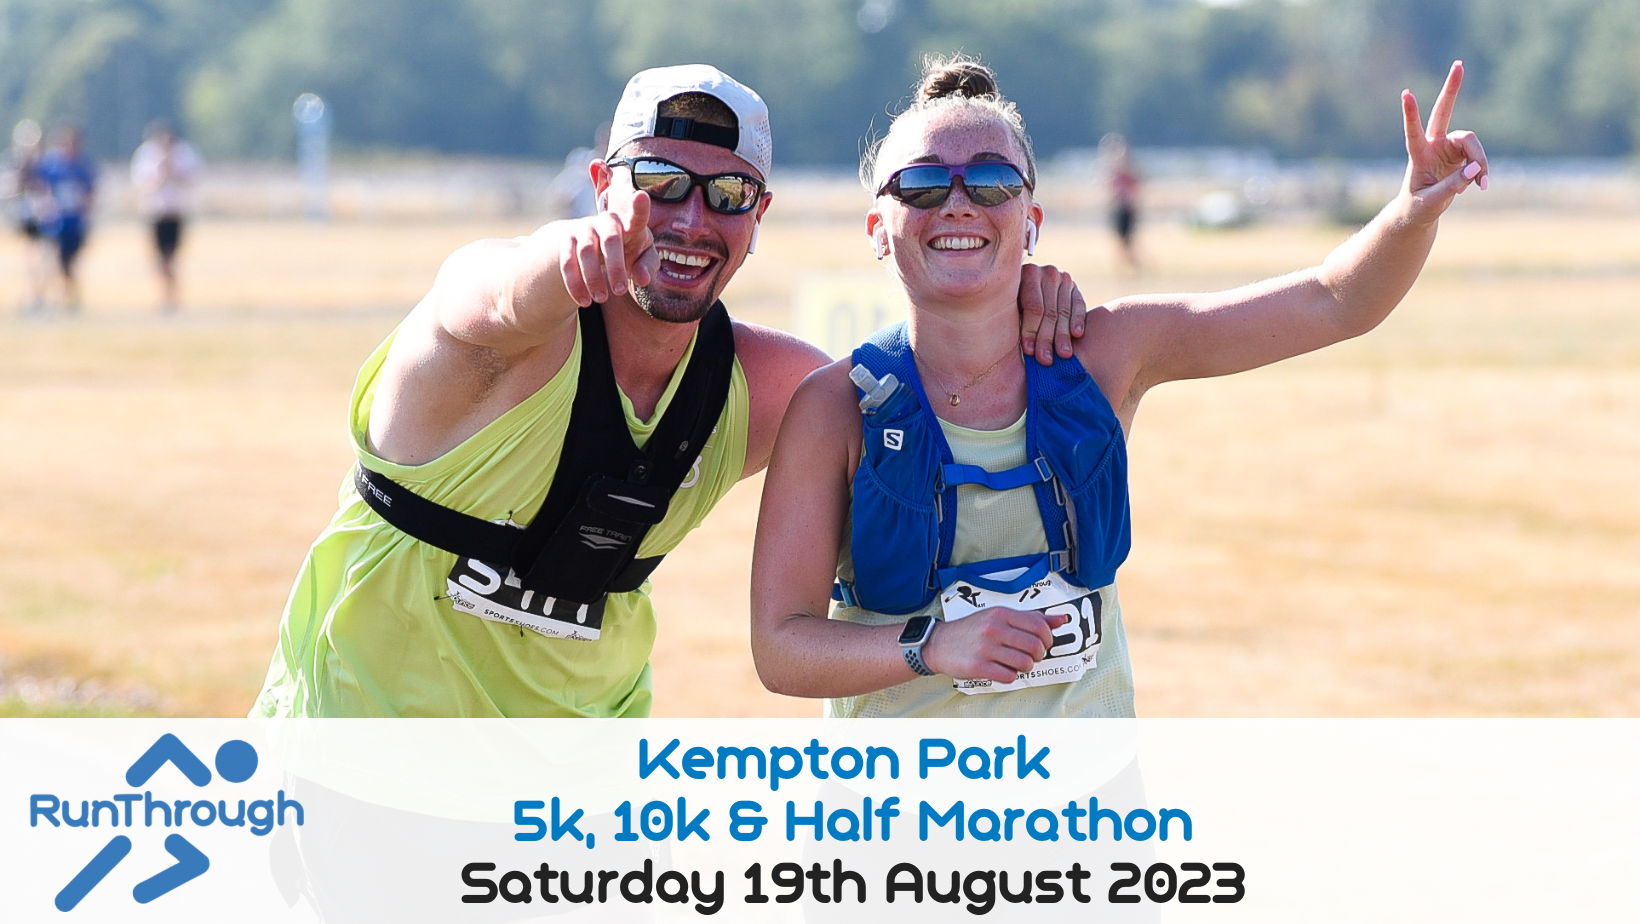 Image for RunThrough Kempton Park 5k